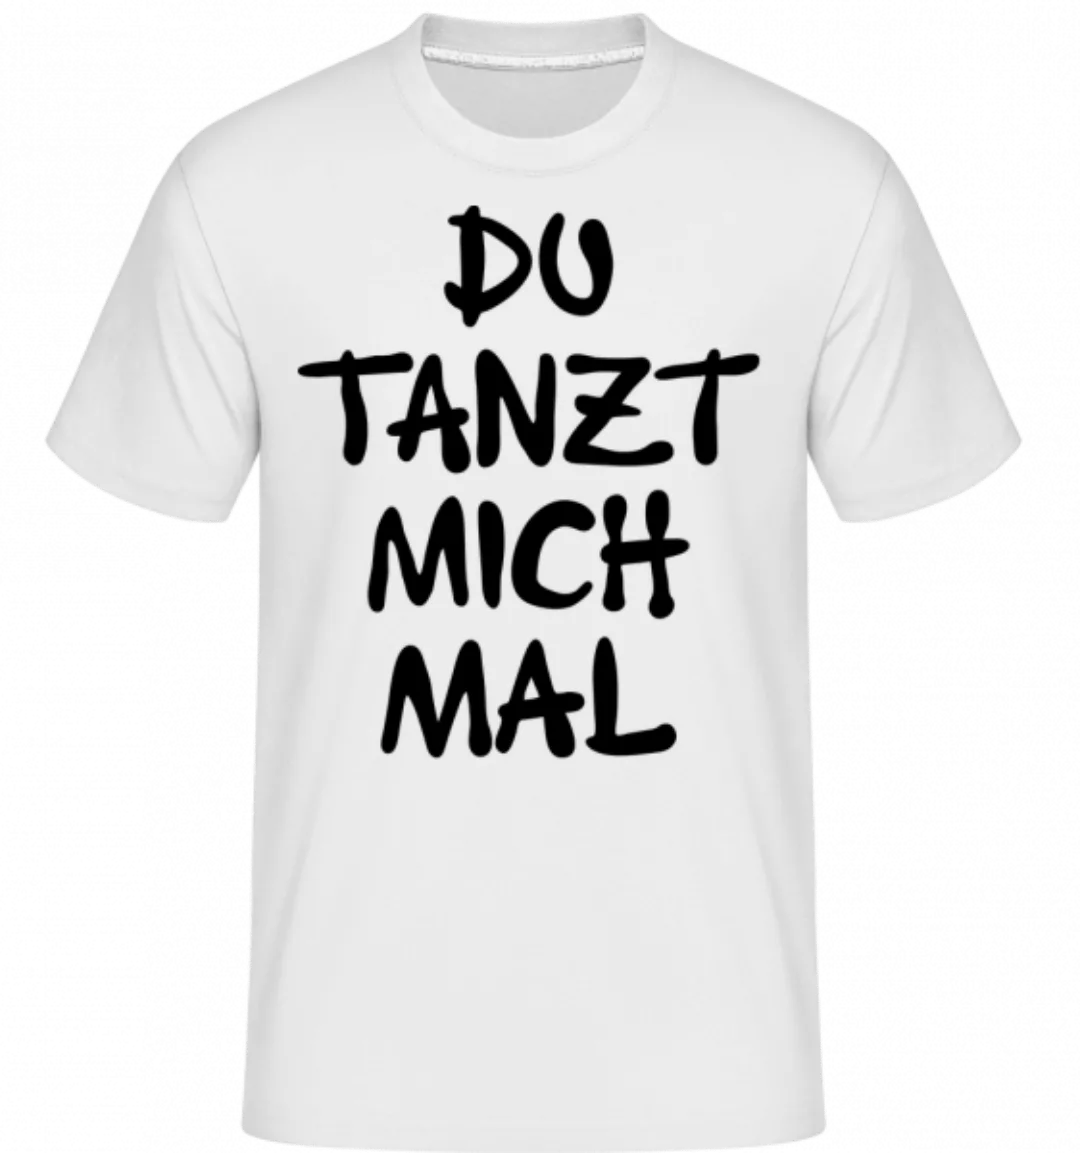 Du Tanzt Mich Mal · Shirtinator Männer T-Shirt günstig online kaufen